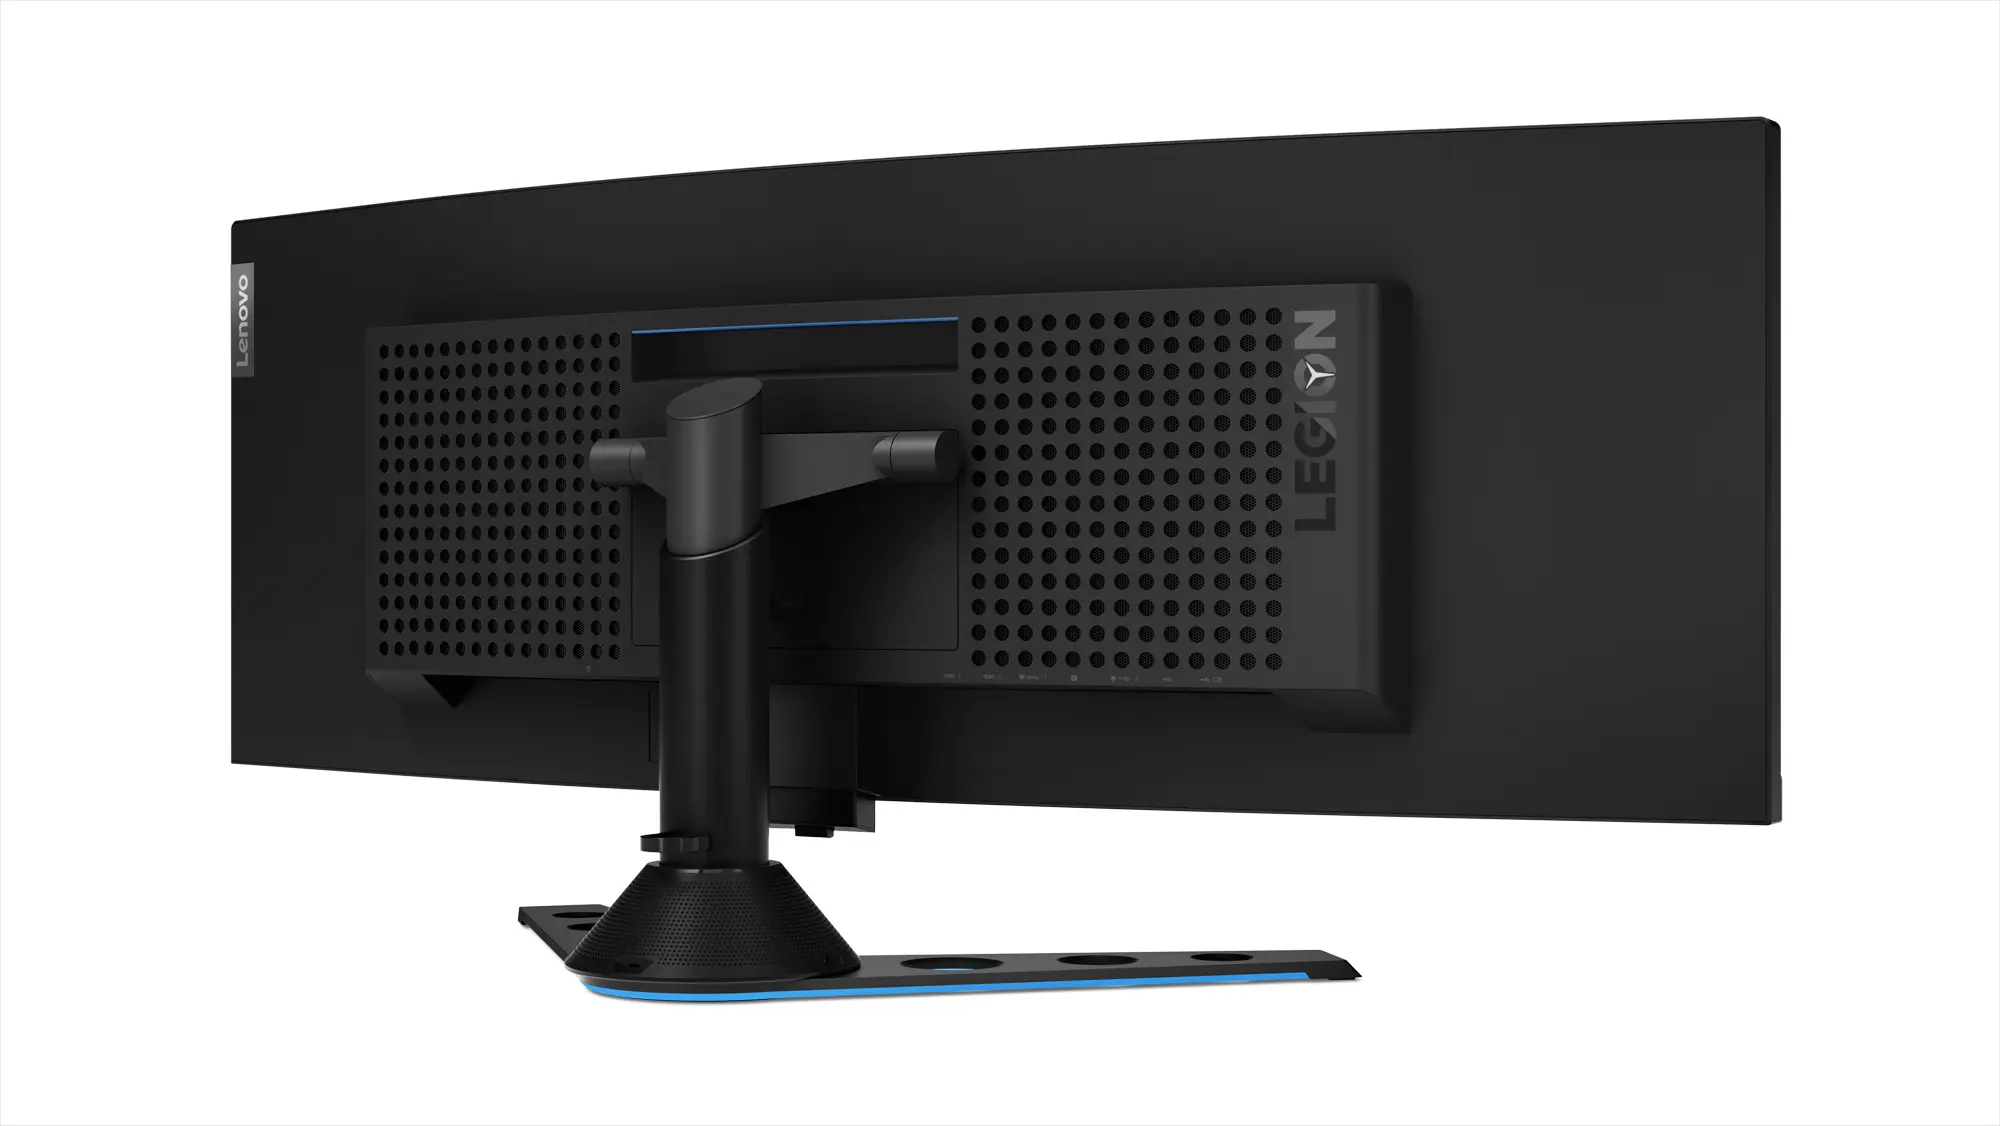 Lenovo lanza una enorme pantalla ultra ancha con dos monitores curvos de 43.4 pulgadas #CES2019